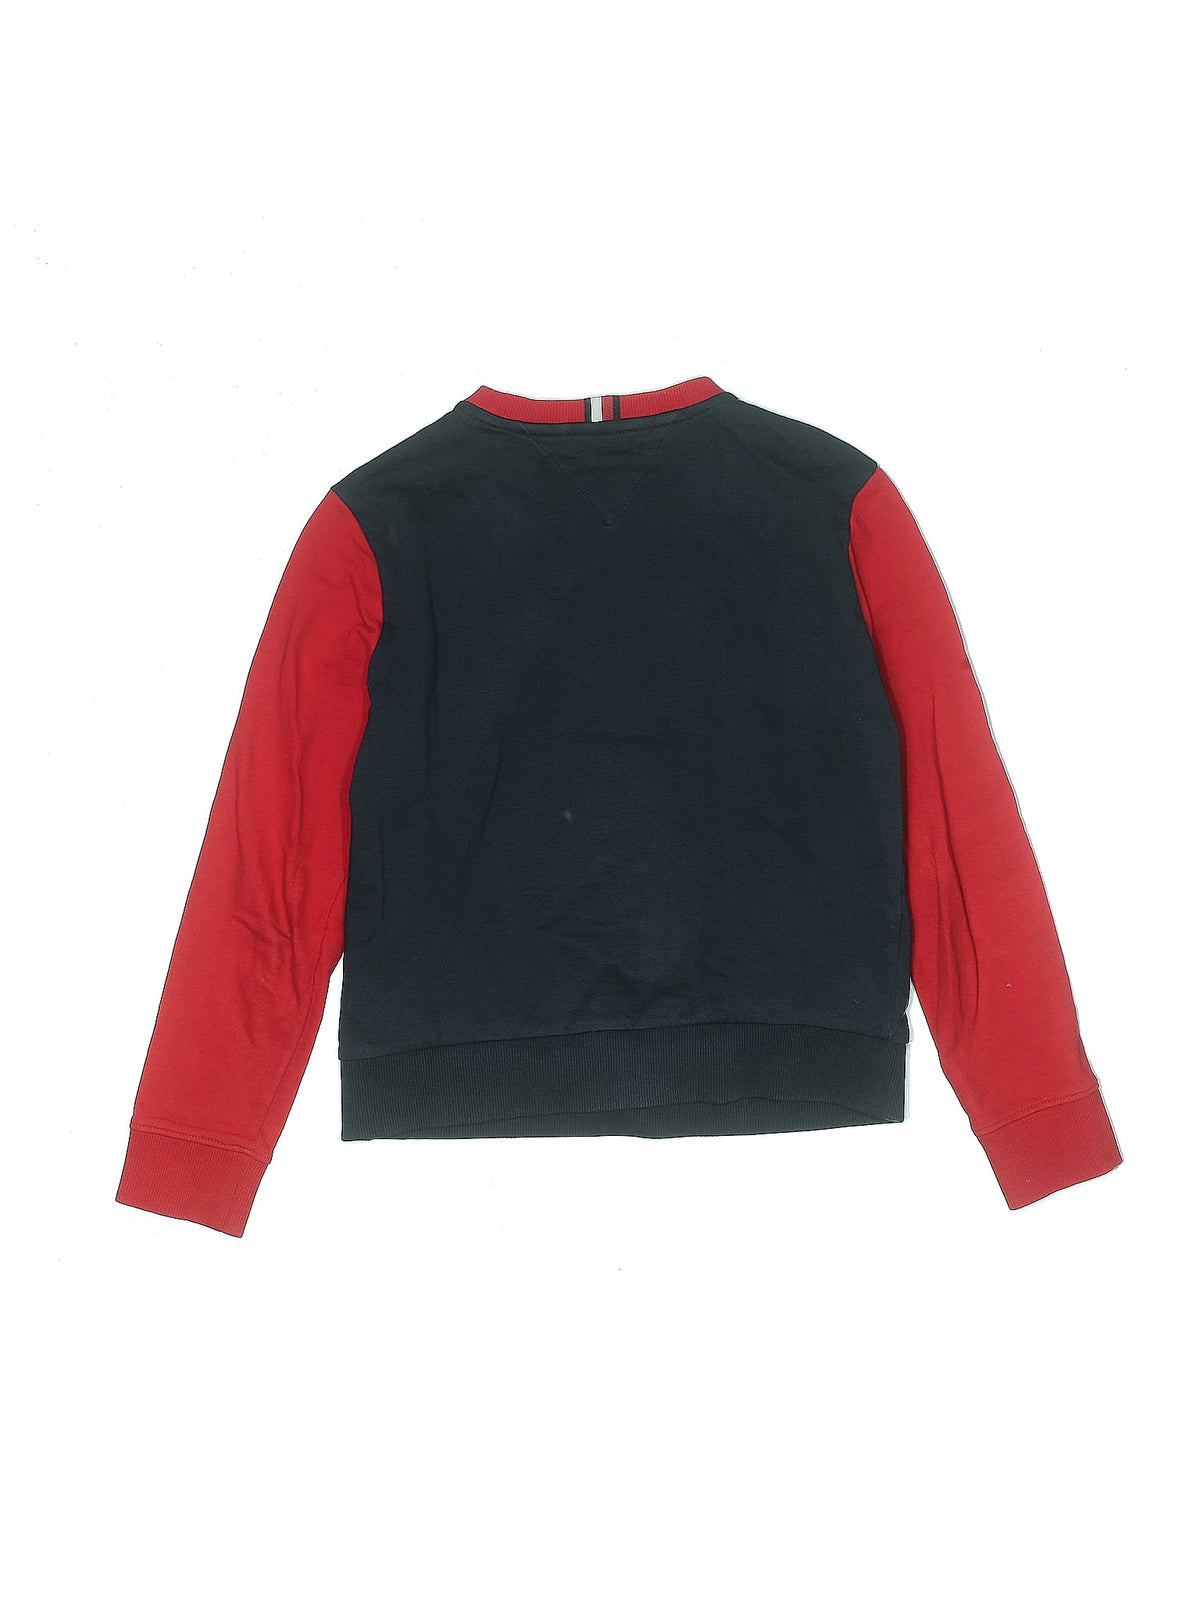 Sweatshirt size - 152 cm